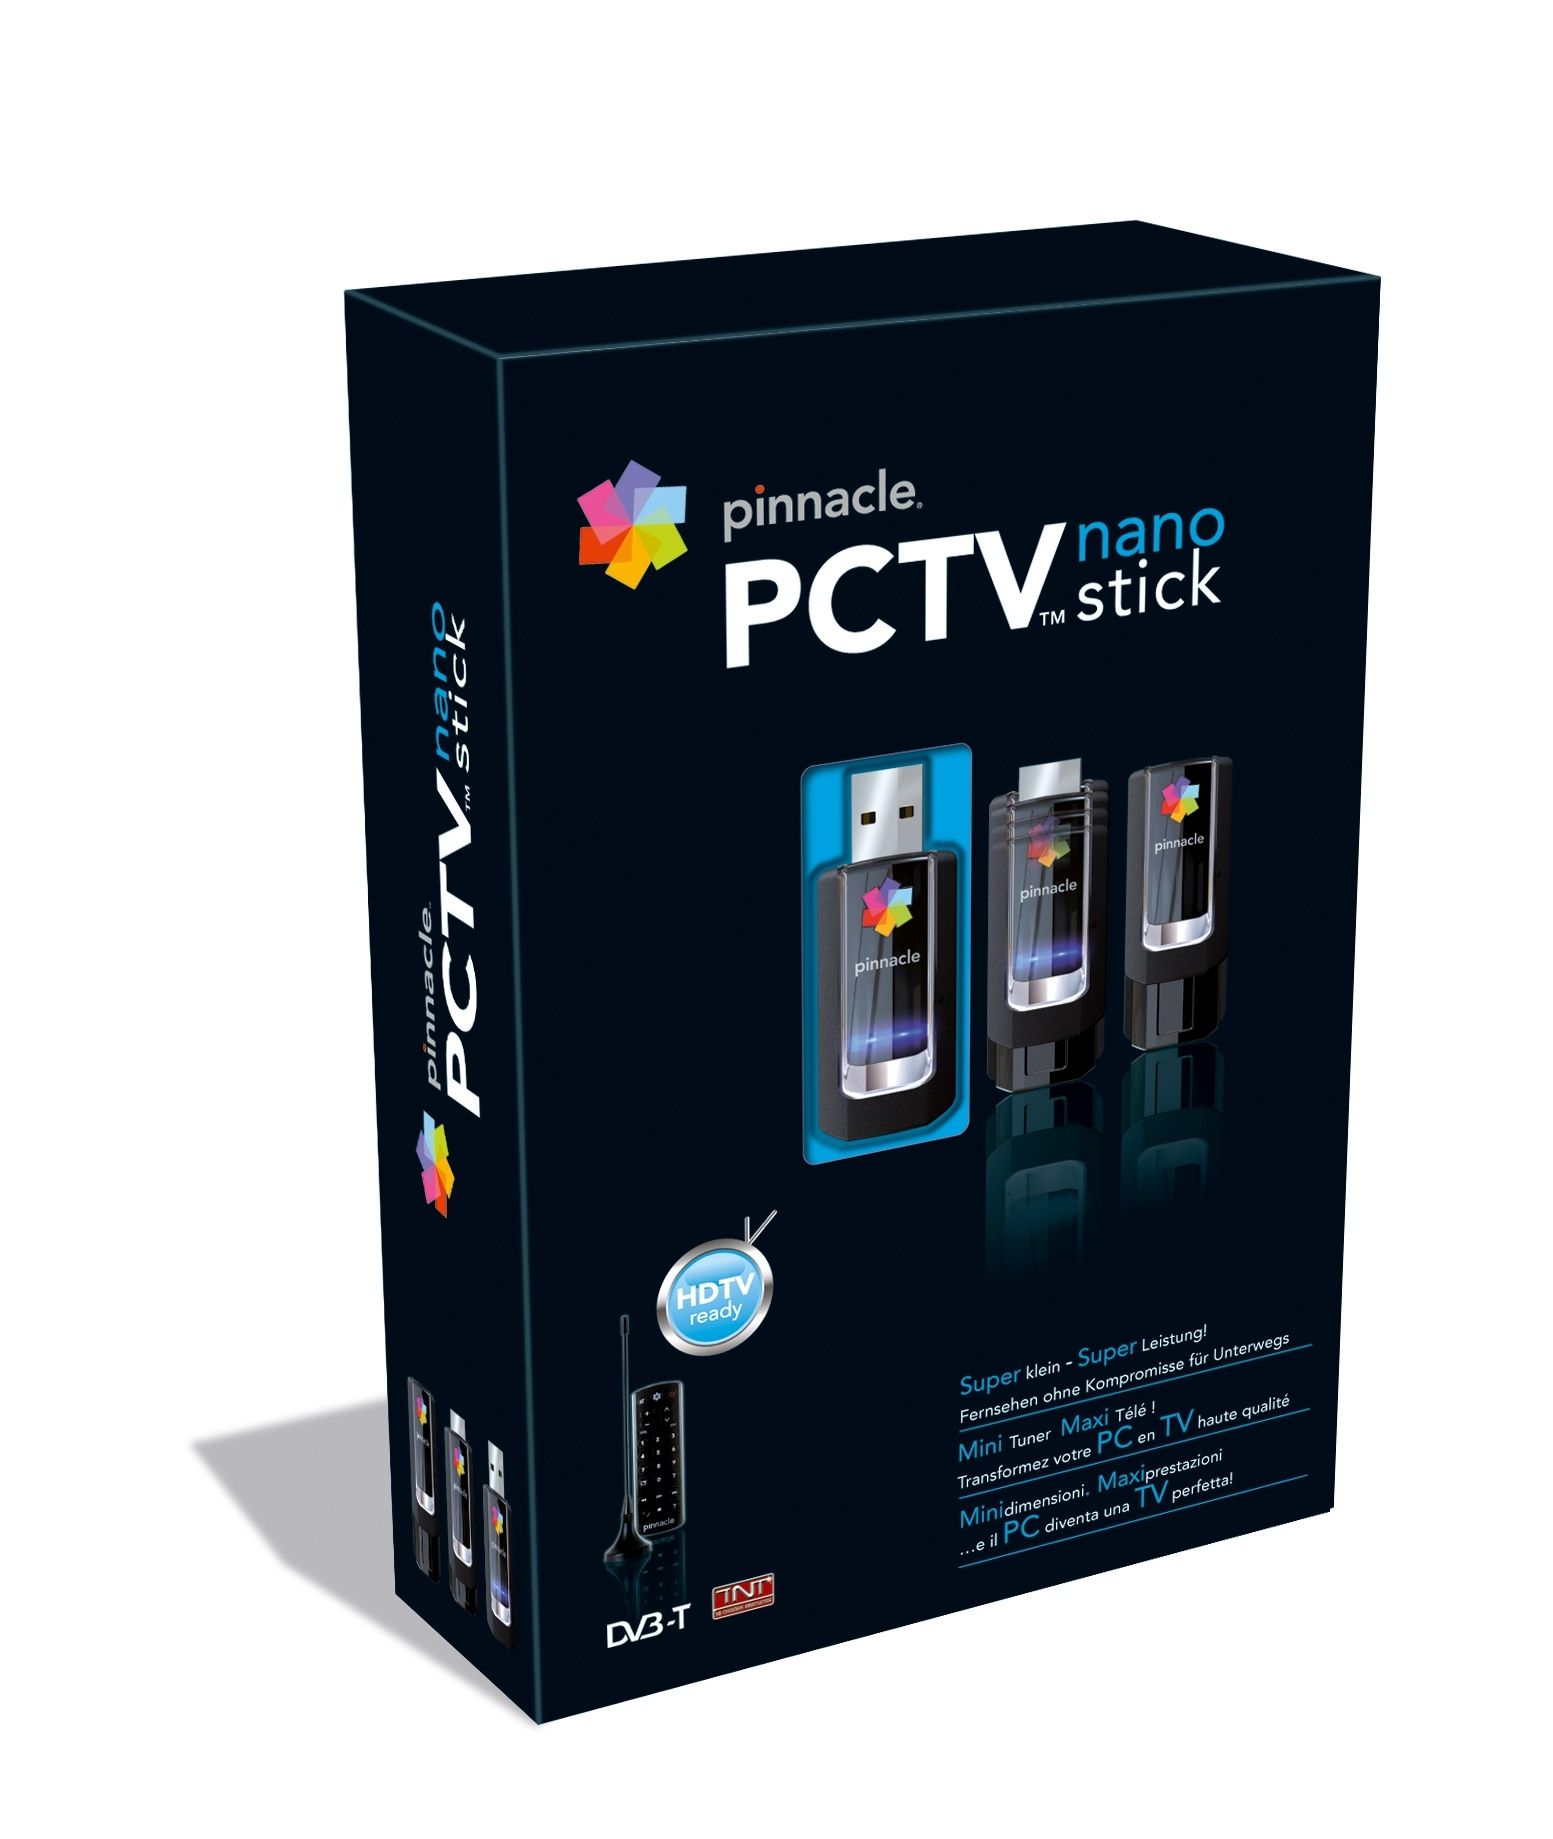 Pinnacle PCTV nano stick HDTV